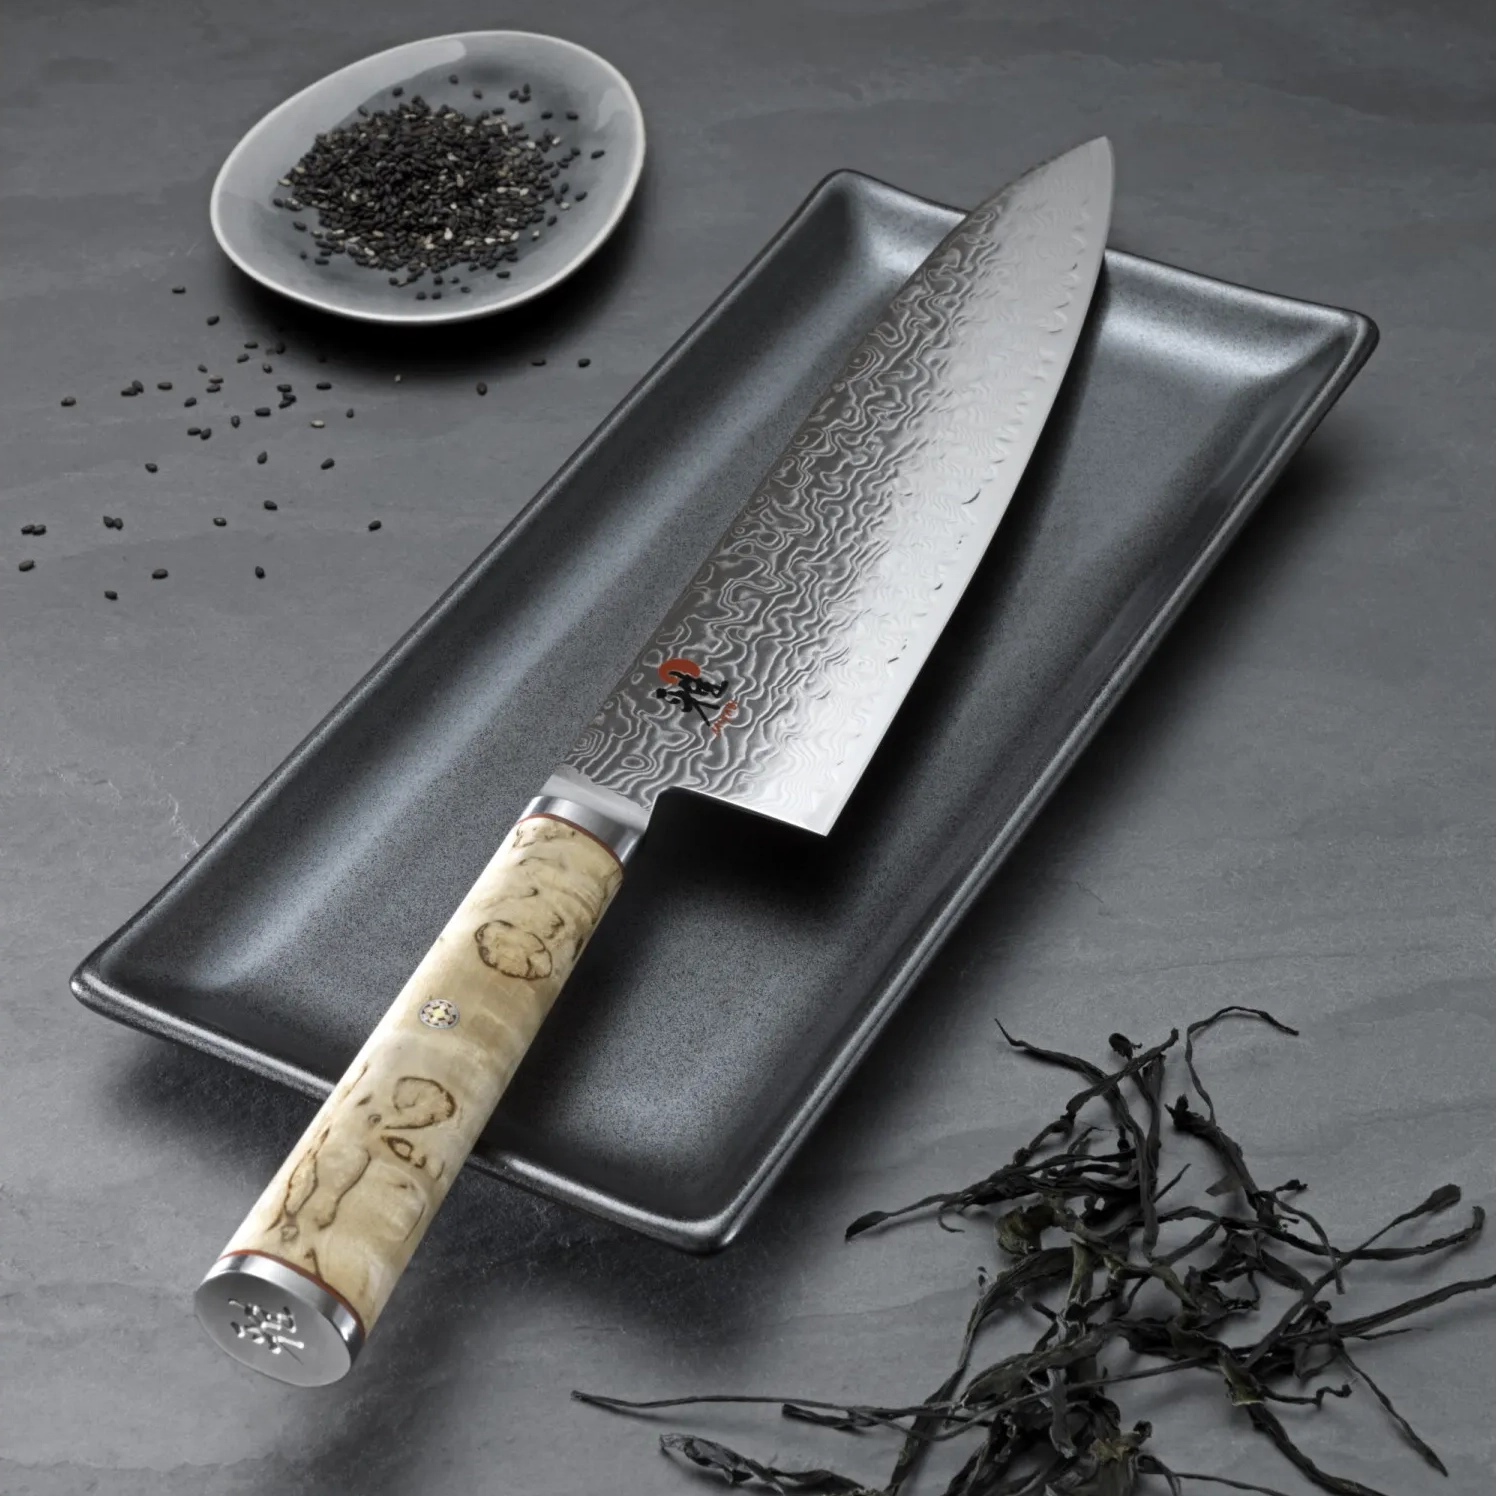 Miyabi Birchwood SG2 Prep Knife, 5.5-in